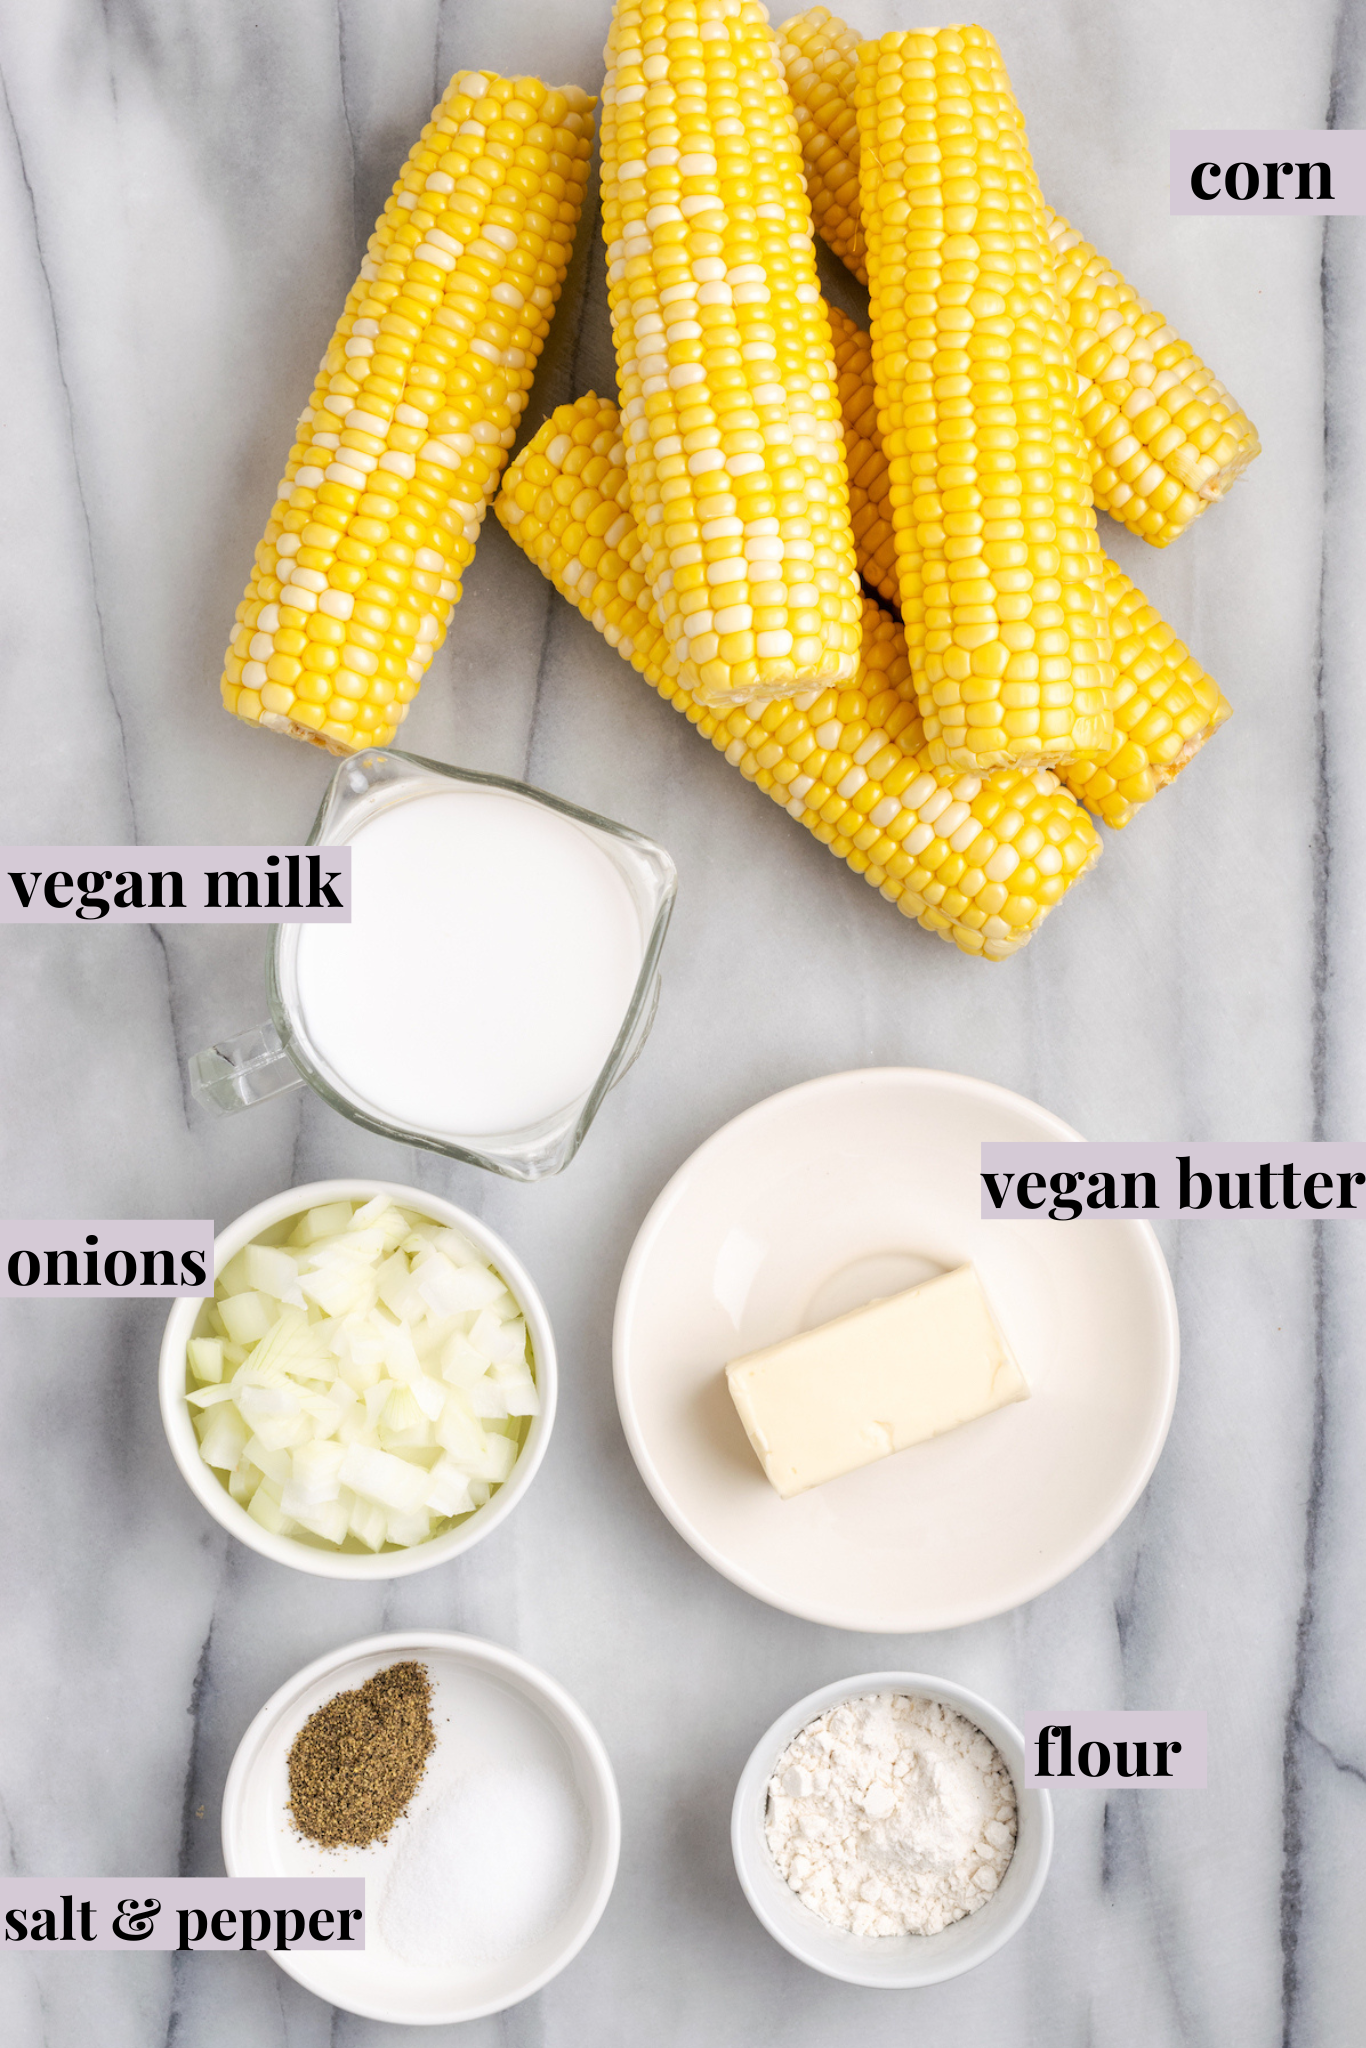 Overhead view of vegan creamed corn ingredients with labels